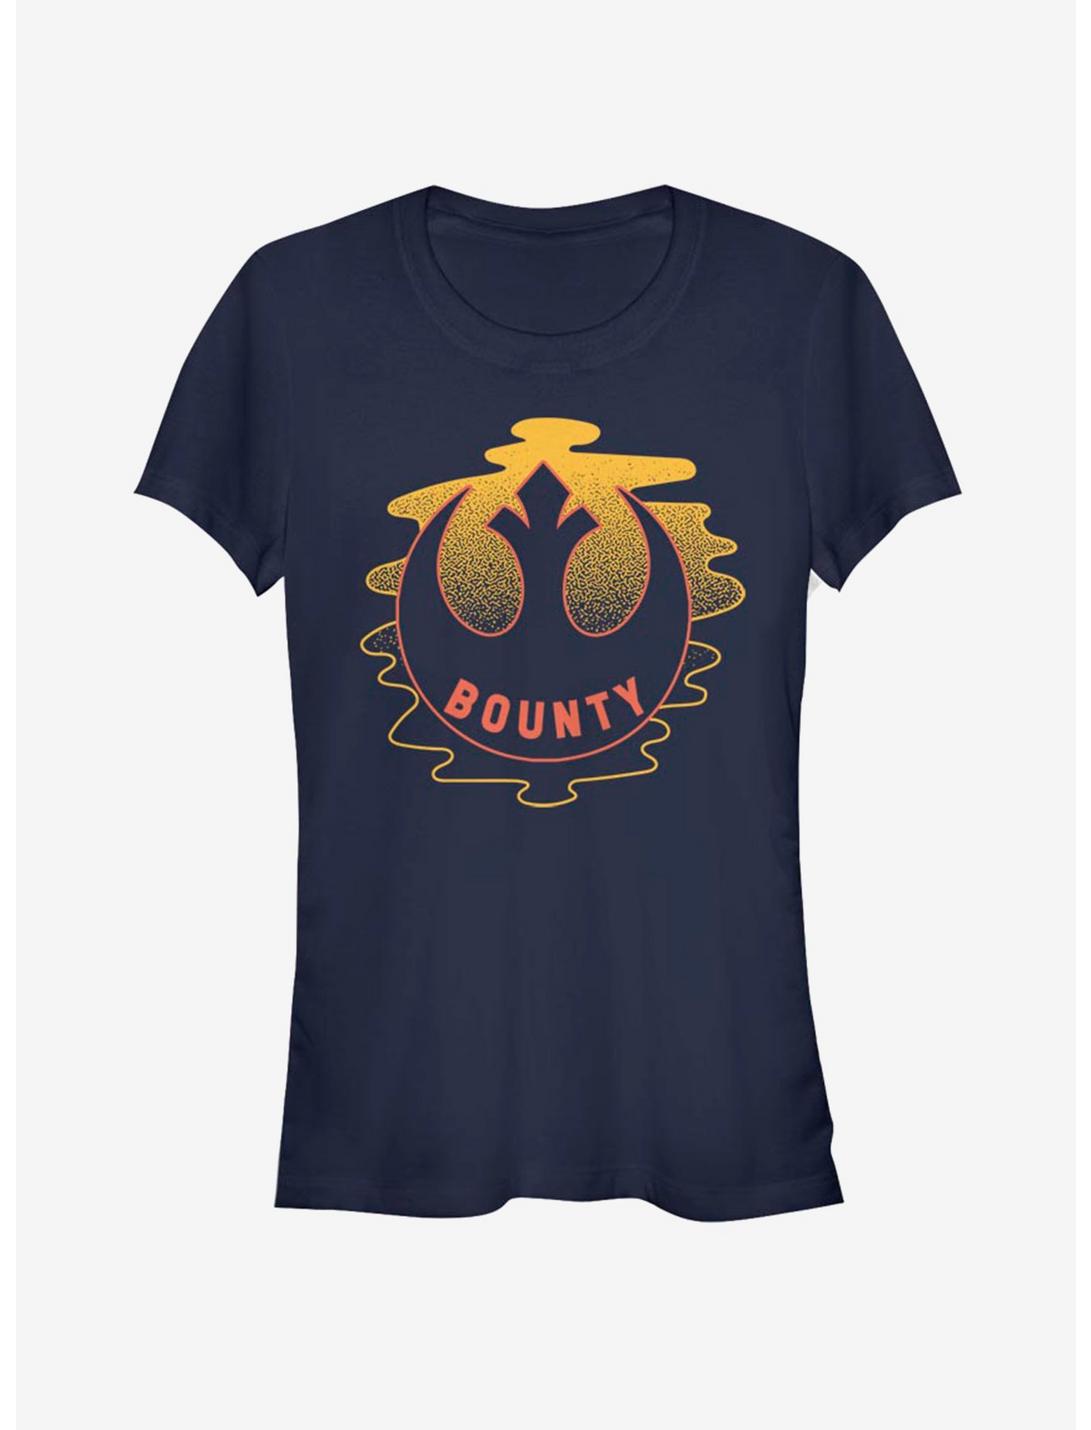 Star Wars Bounty Girls T-Shirt, NAVY, hi-res